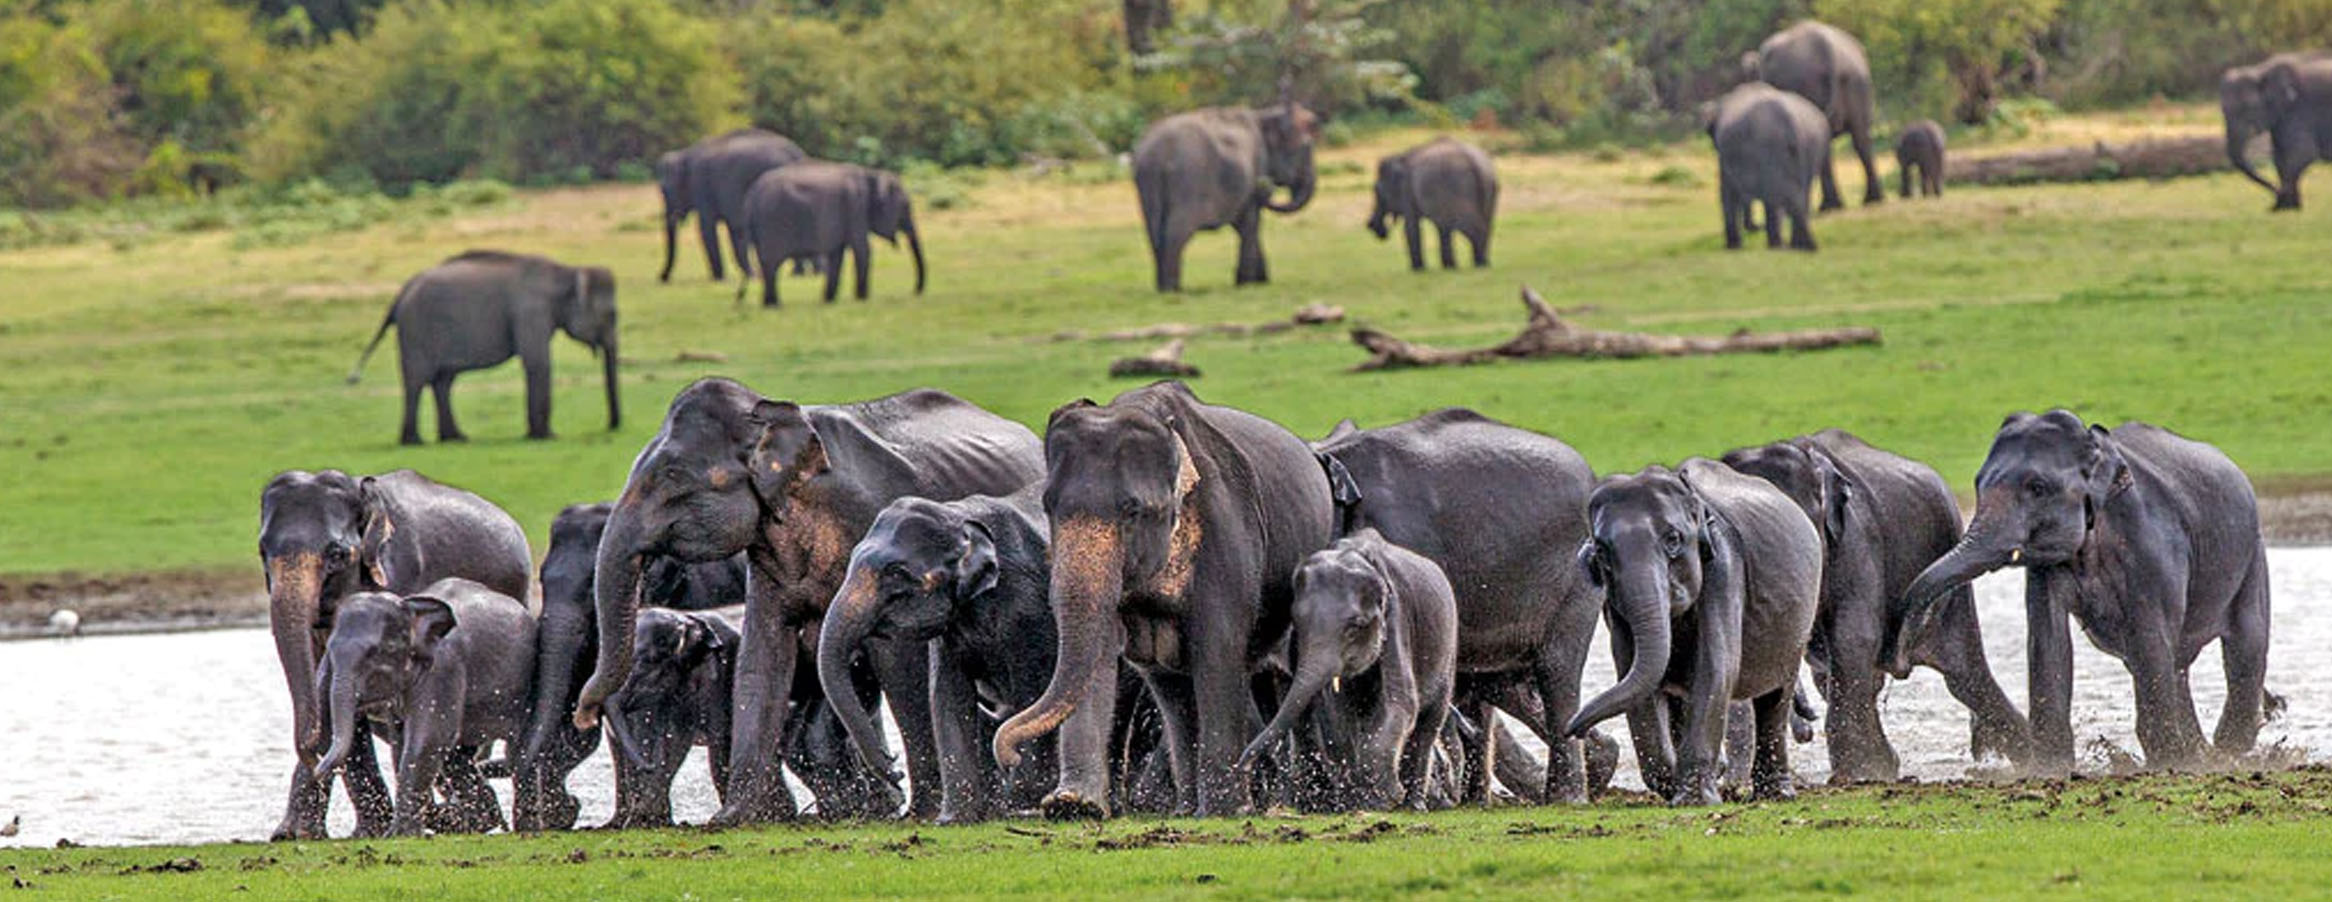 Udawalawe National Park Tour in Sri Lanka | Rock Lanka Tours